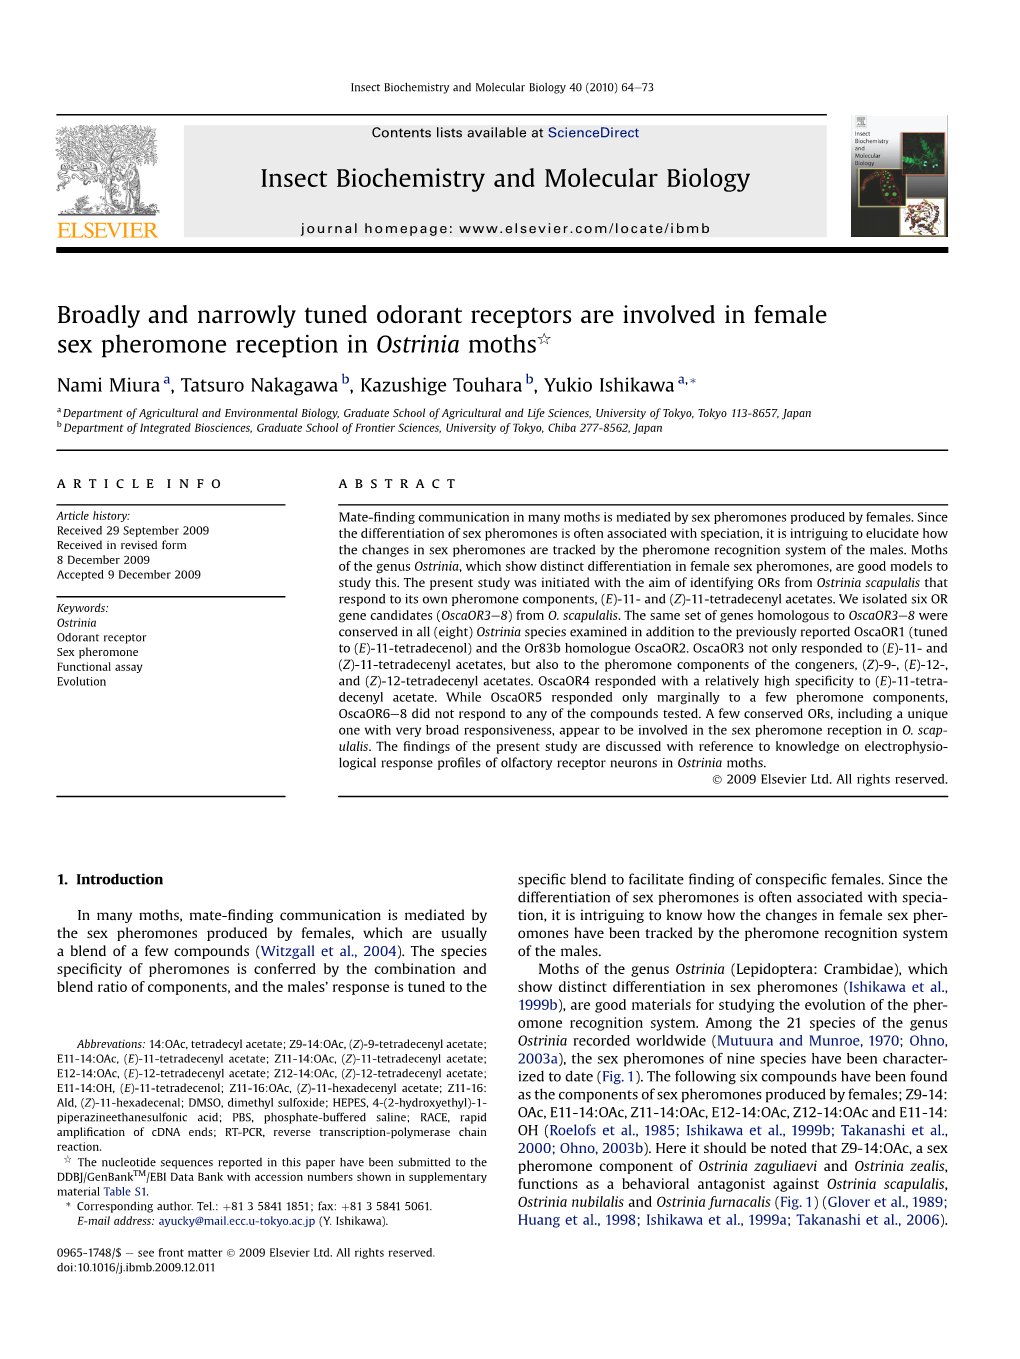 Broadly and Narrowly Tuned Odorant Receptors Are Involved in Female Sex Pheromone Reception in Ostrinia Mothsq